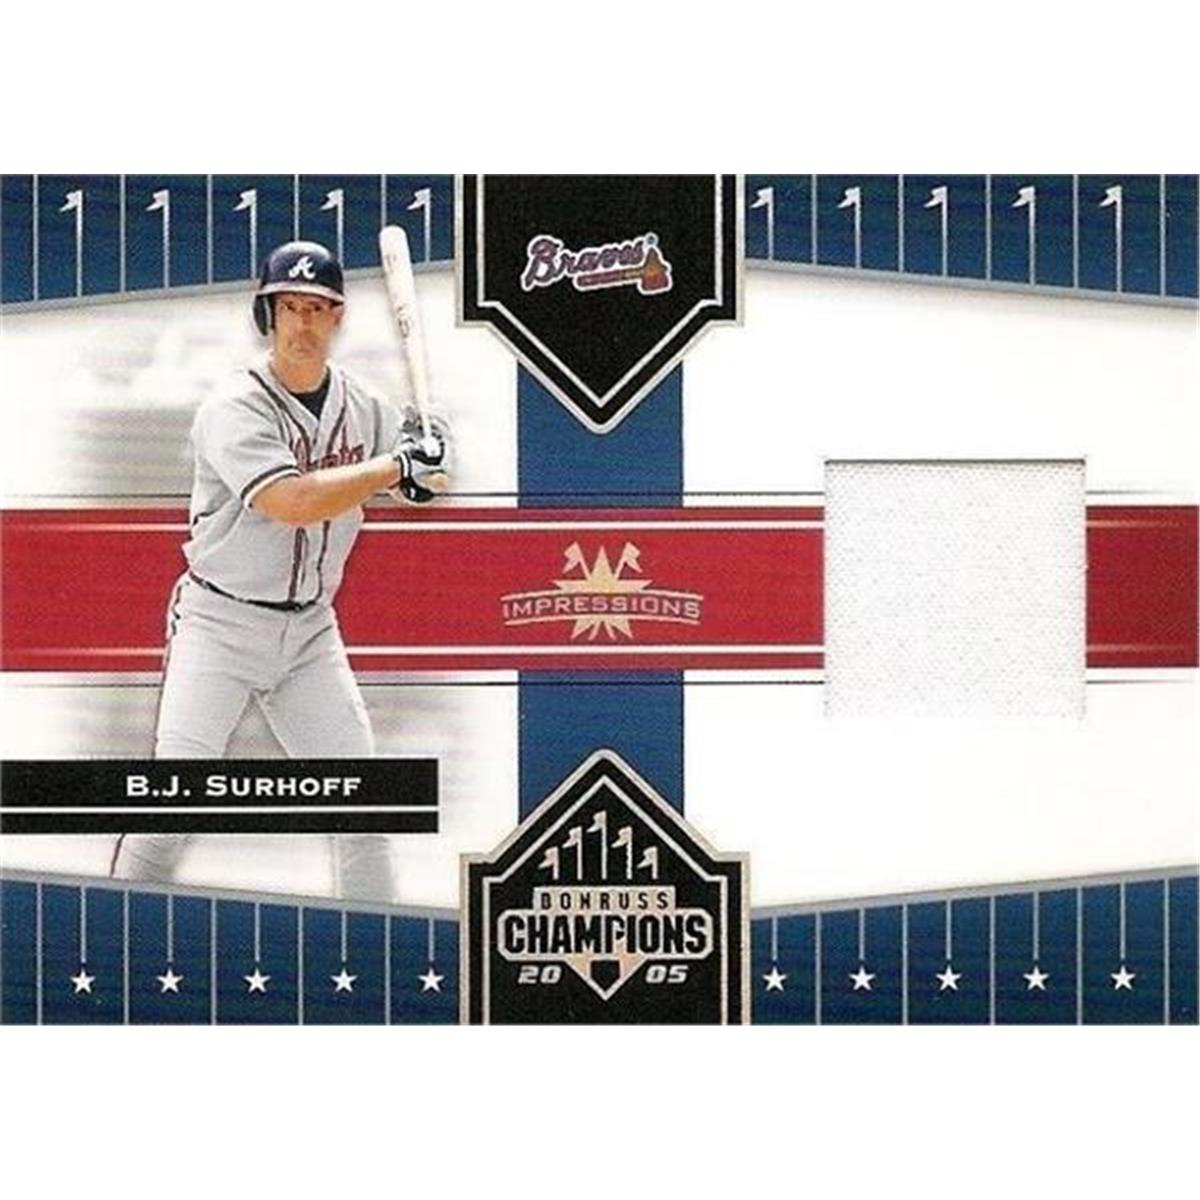 Picture of Autograph Warehouse 409035 B.j. Surhoff Player Worn Jersey Patch Baseball Card - 2005 Donruss Champions-21